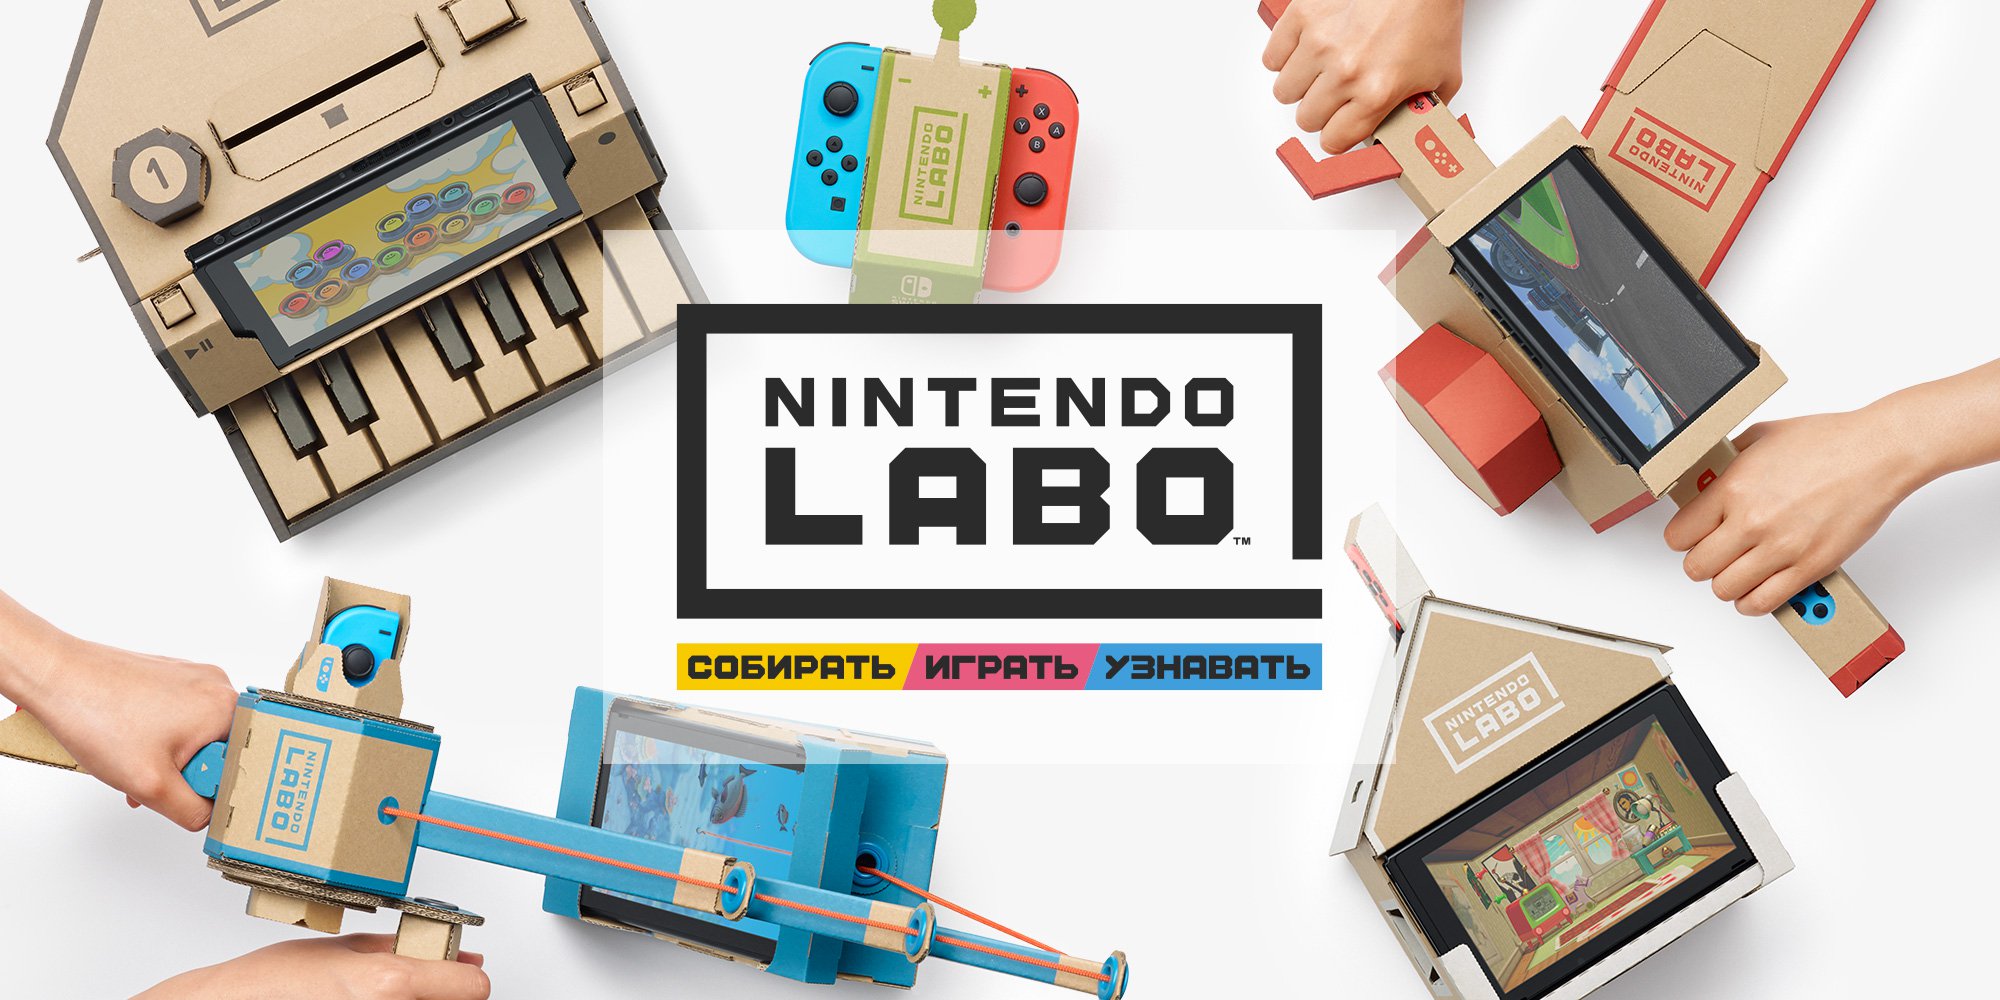 #vídeo | do-it-yourself: interativos designers da Nintendo Labo